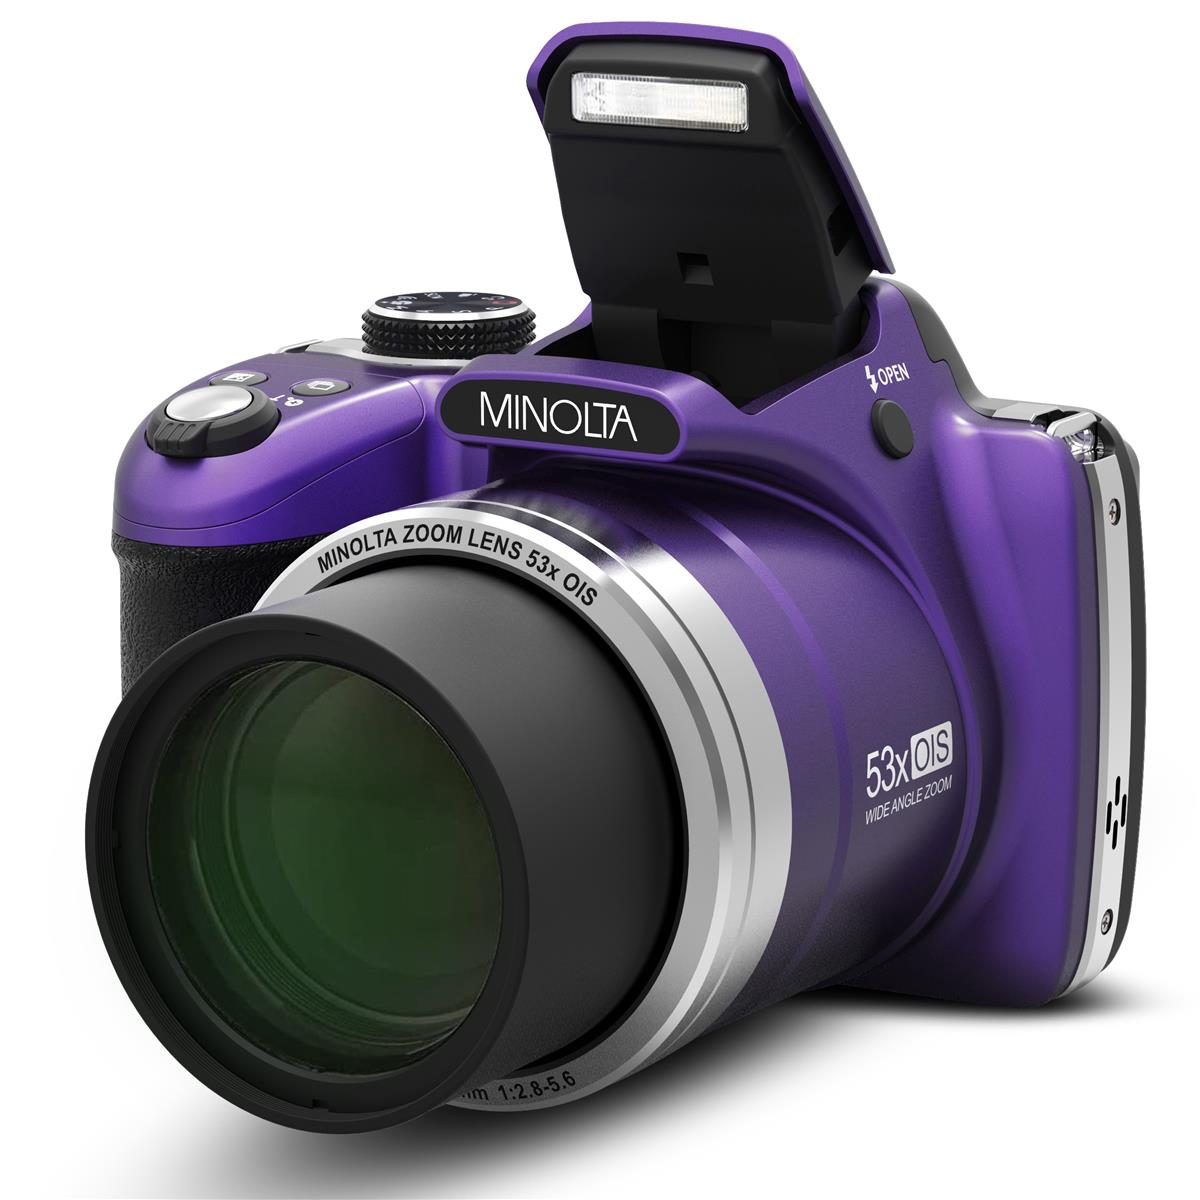 Photos - Other photo accessories Konica Minolta Minolta MN53Z 16MP FHD Wi-Fi Bridge Camera with 53x Optical Zoom, Purple M 